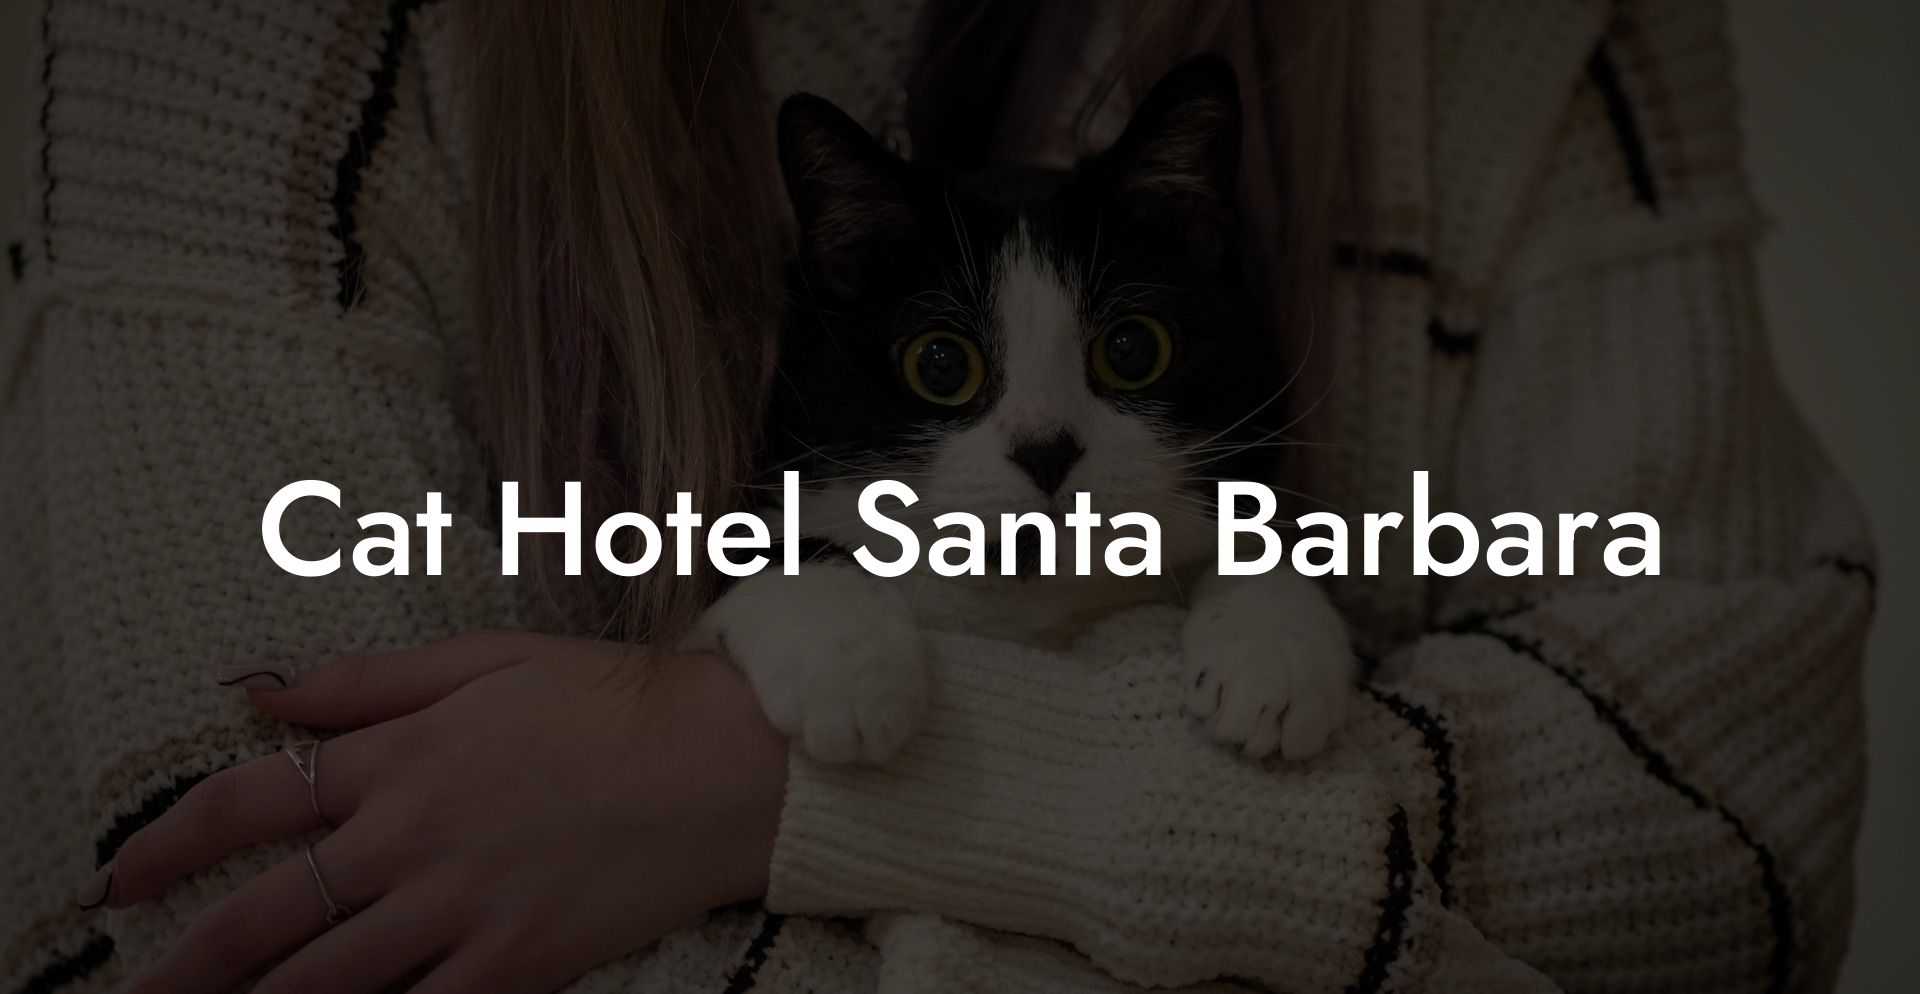 Cat Hotel Santa Barbara